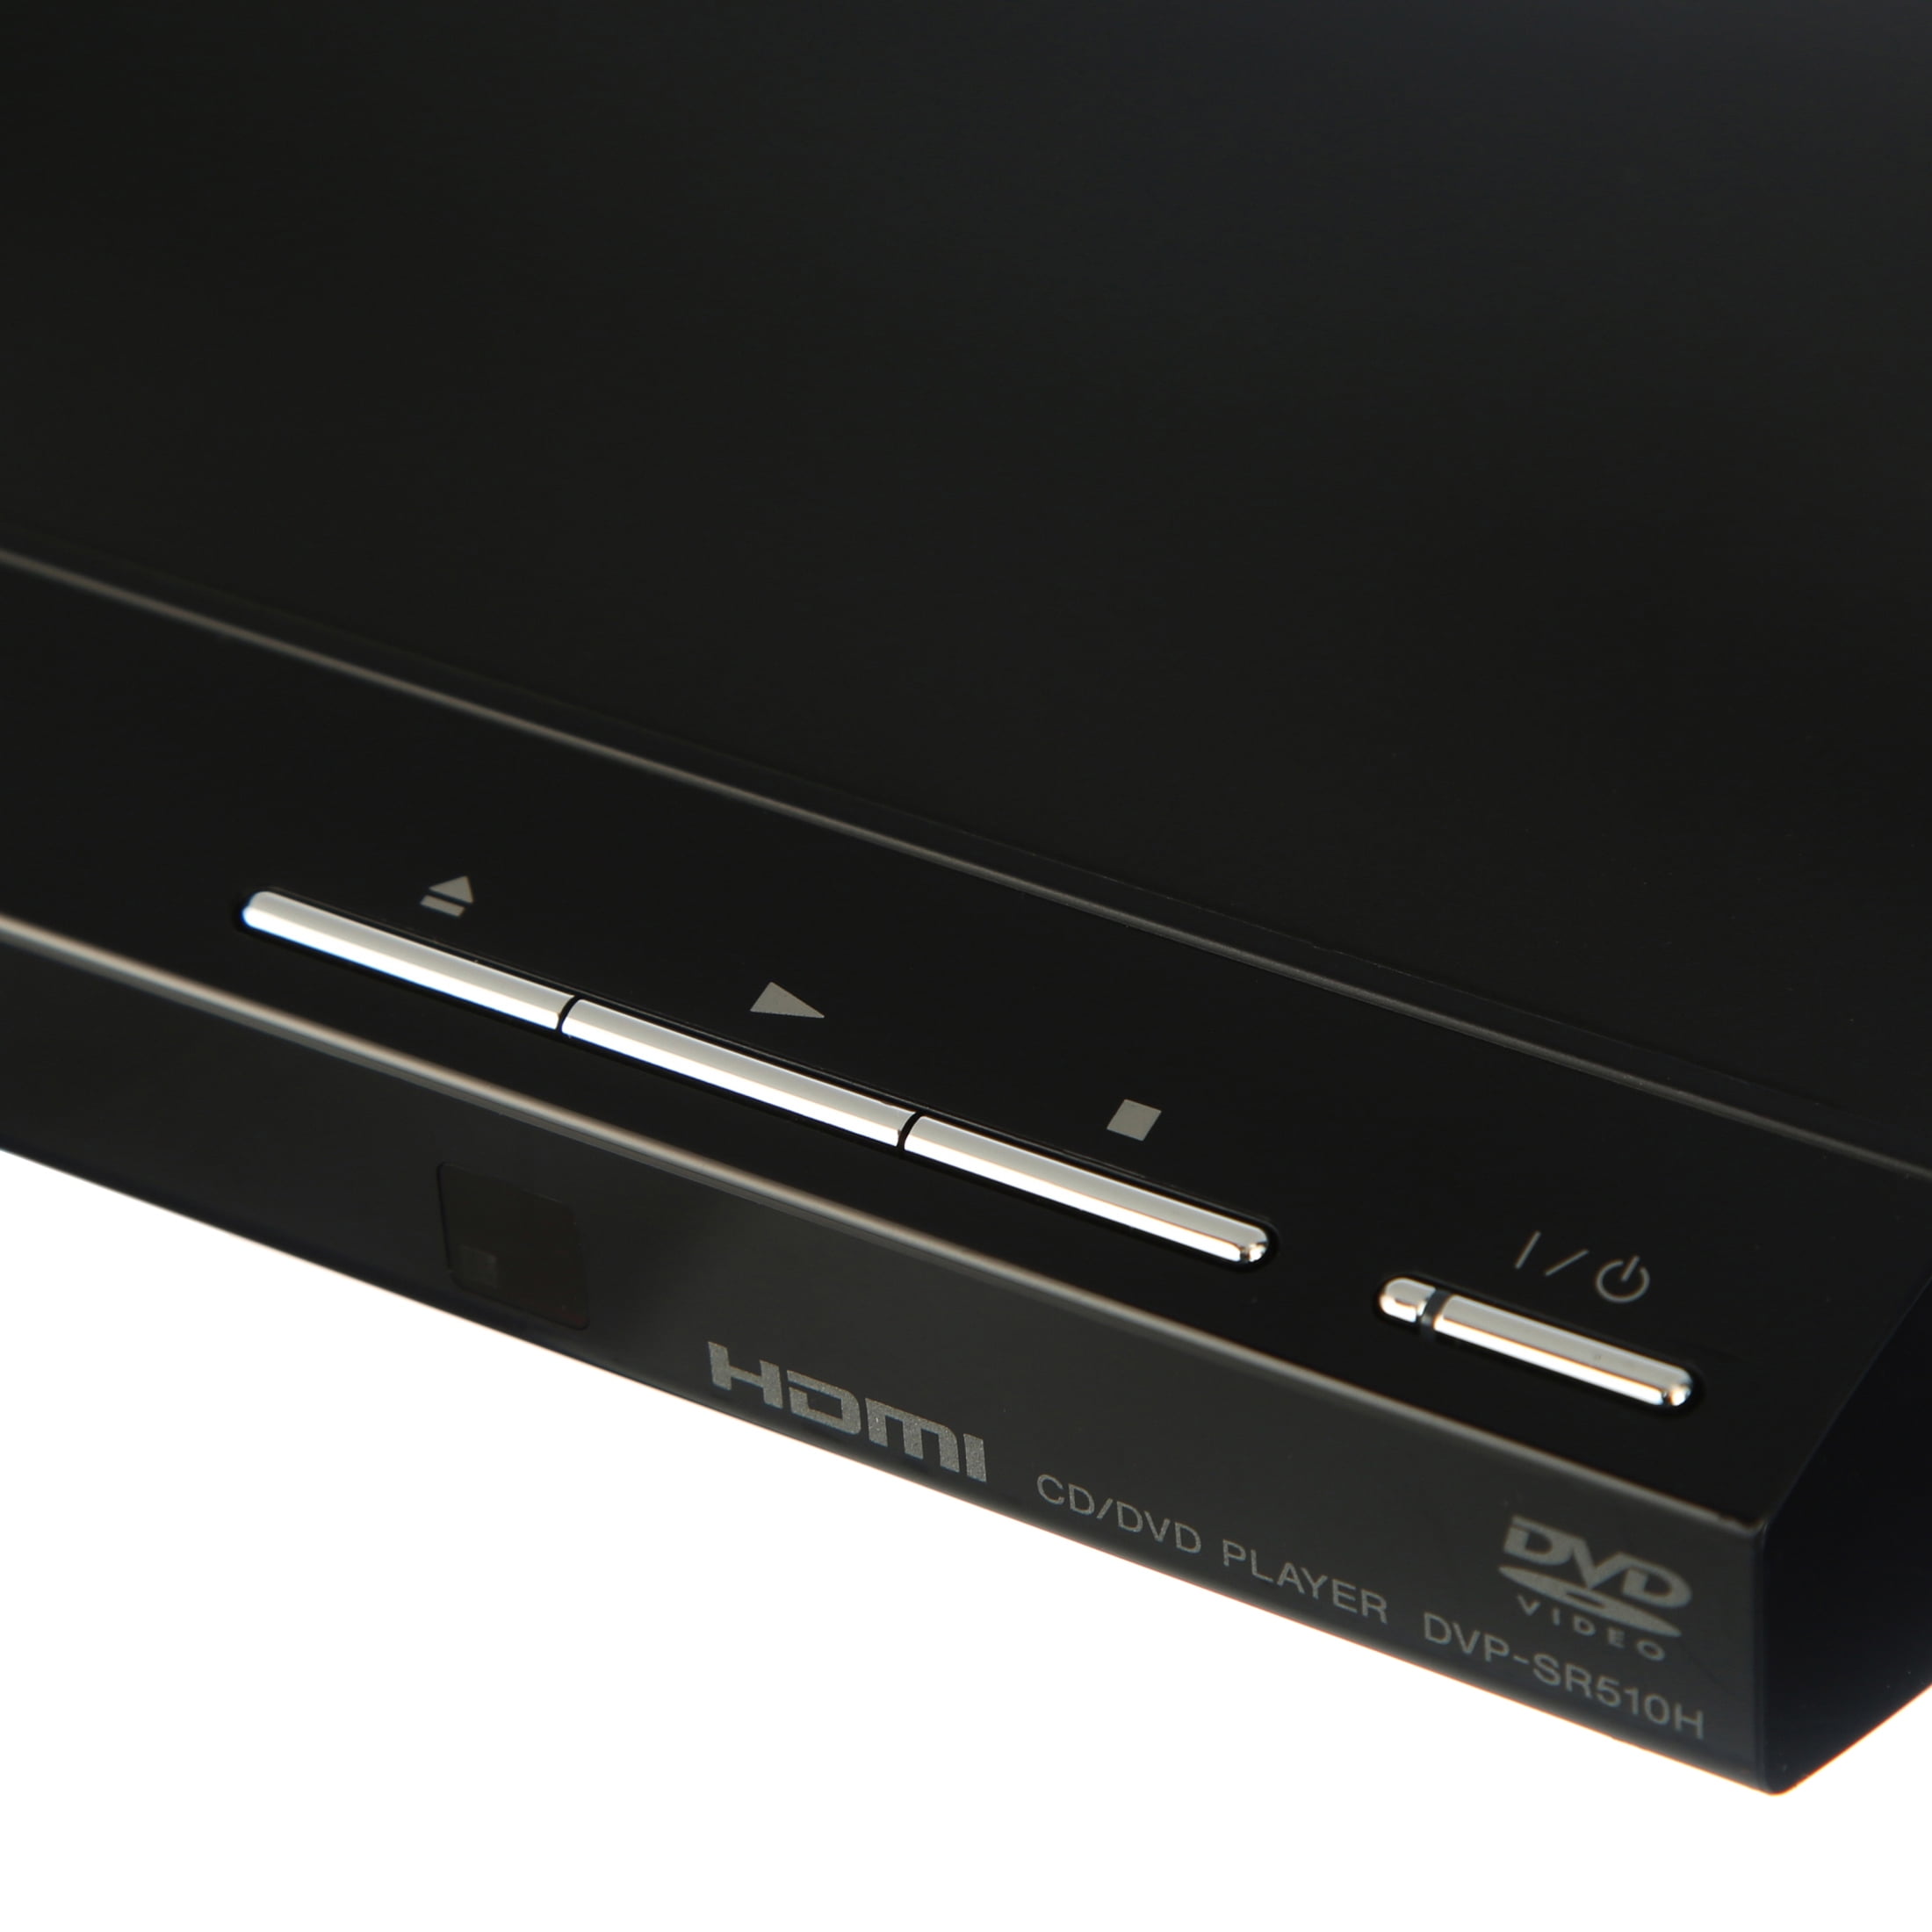 Player HDMI Sony 1080p - Upscaling DVP-SR510H DVD